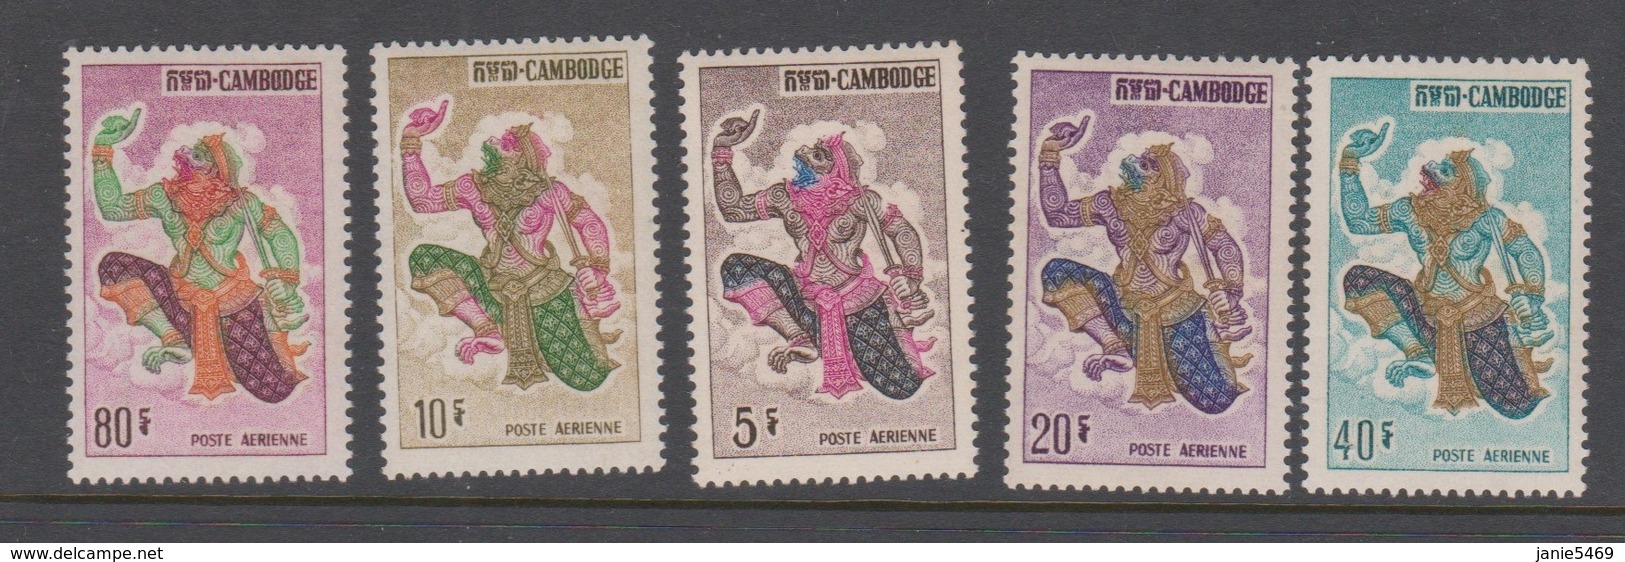 Cambodia SG 165-169 1964 Air Mail,mint Never Hinged - Cambodja